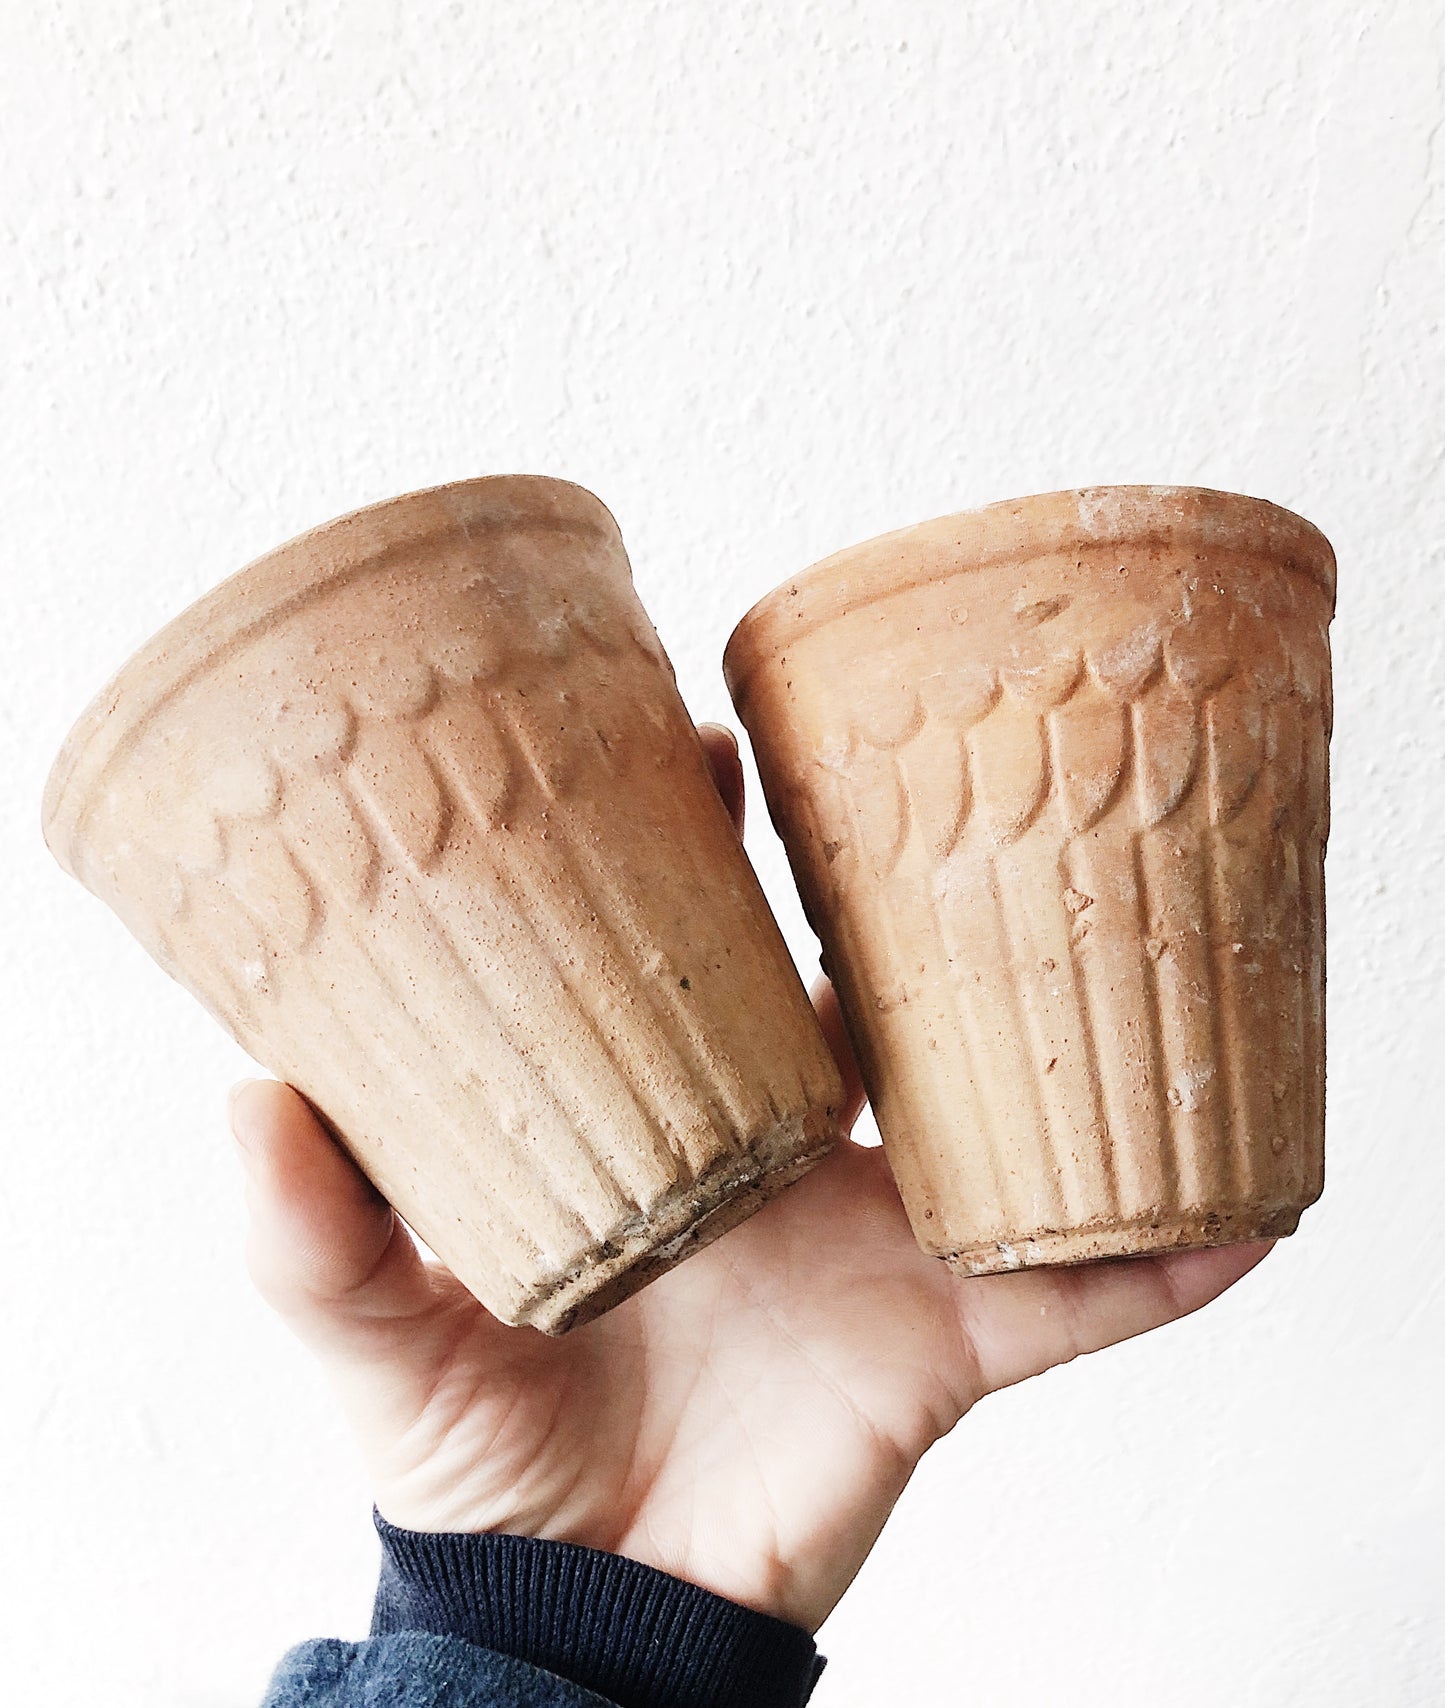 Pair of Terracotta Pots